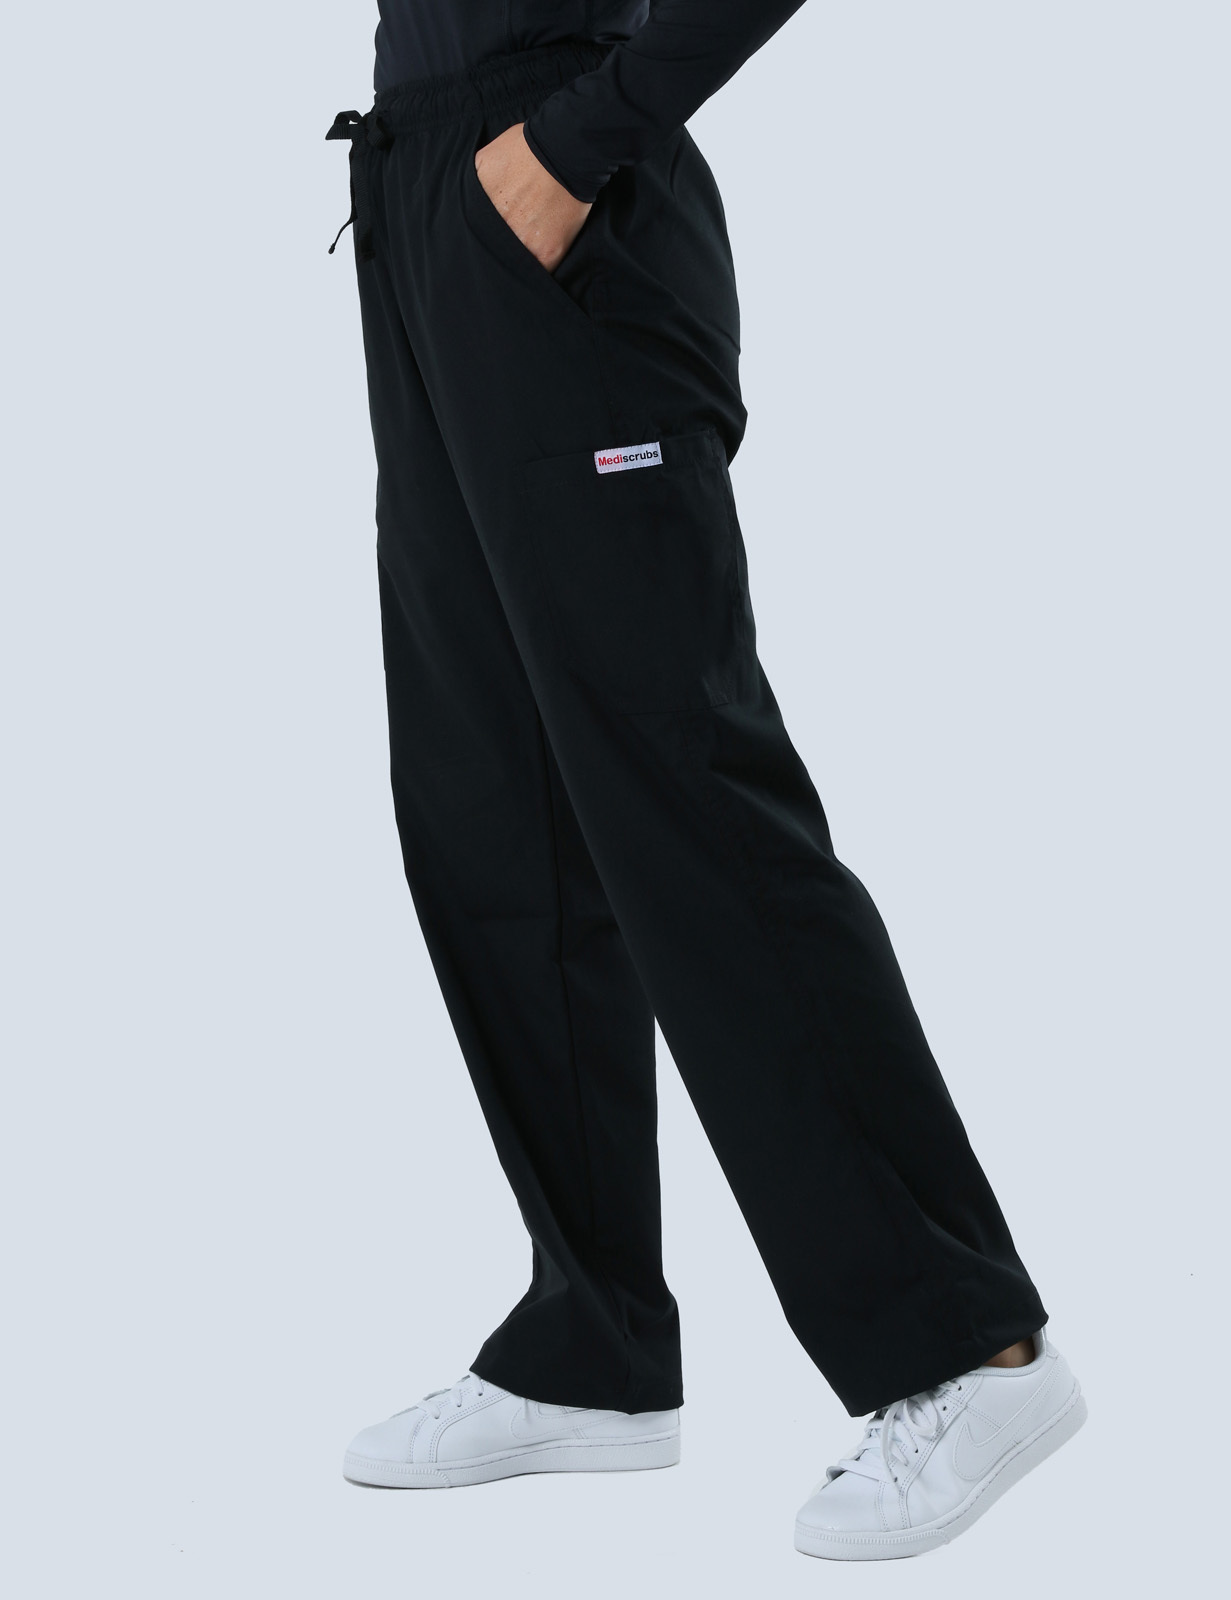 Women's Cargo Performance Pants - Black - Medium